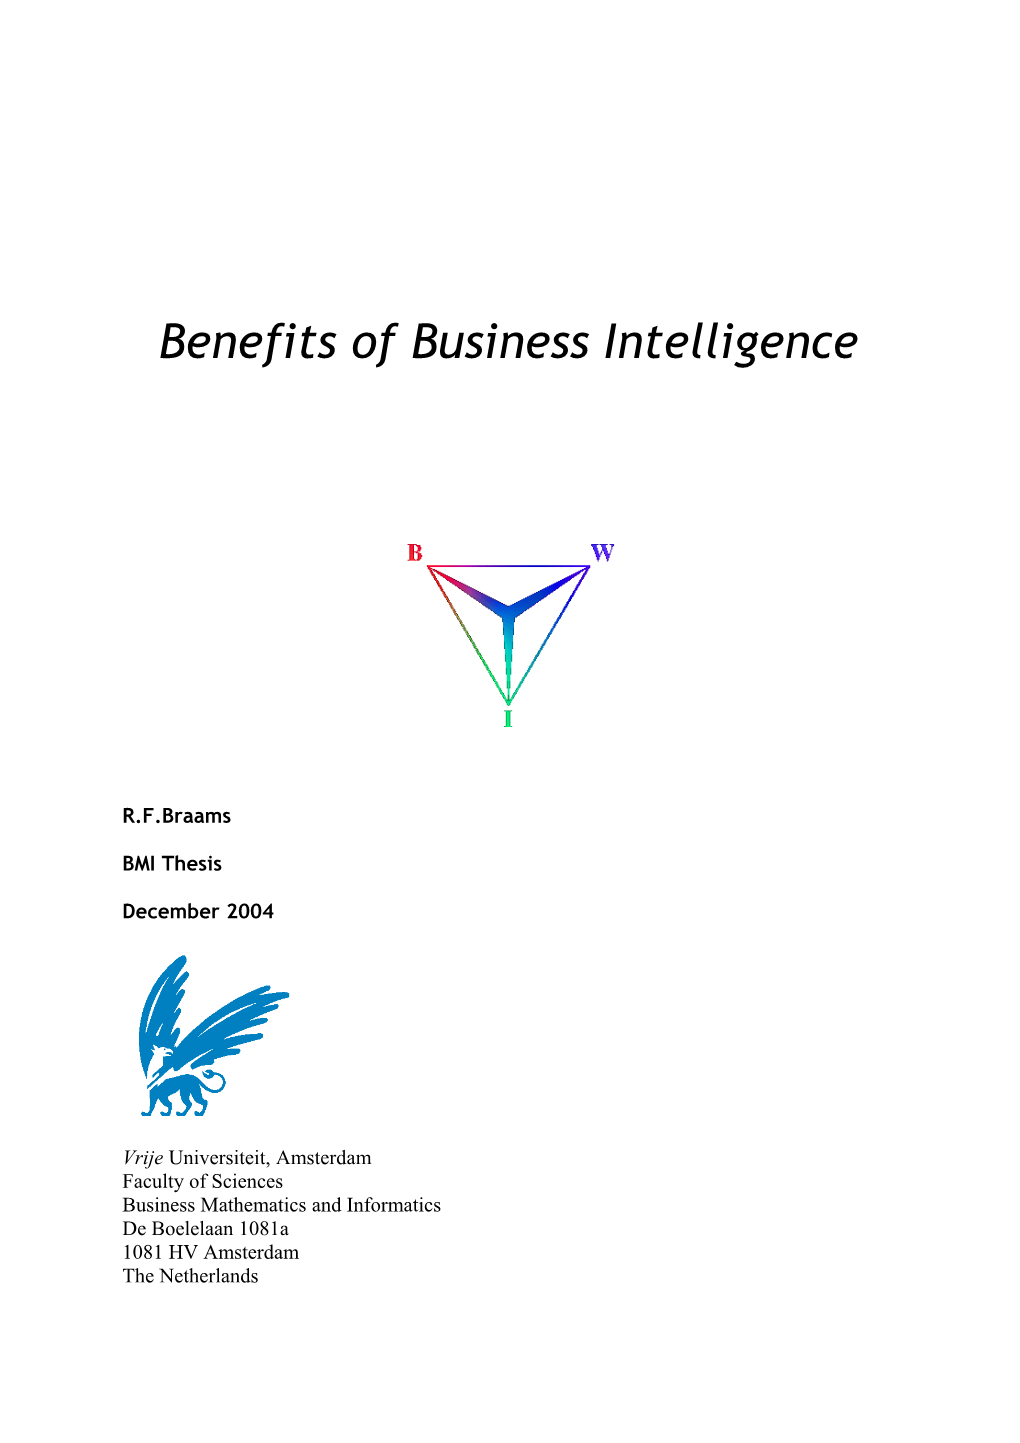 Chapter 3: Benefits of BI